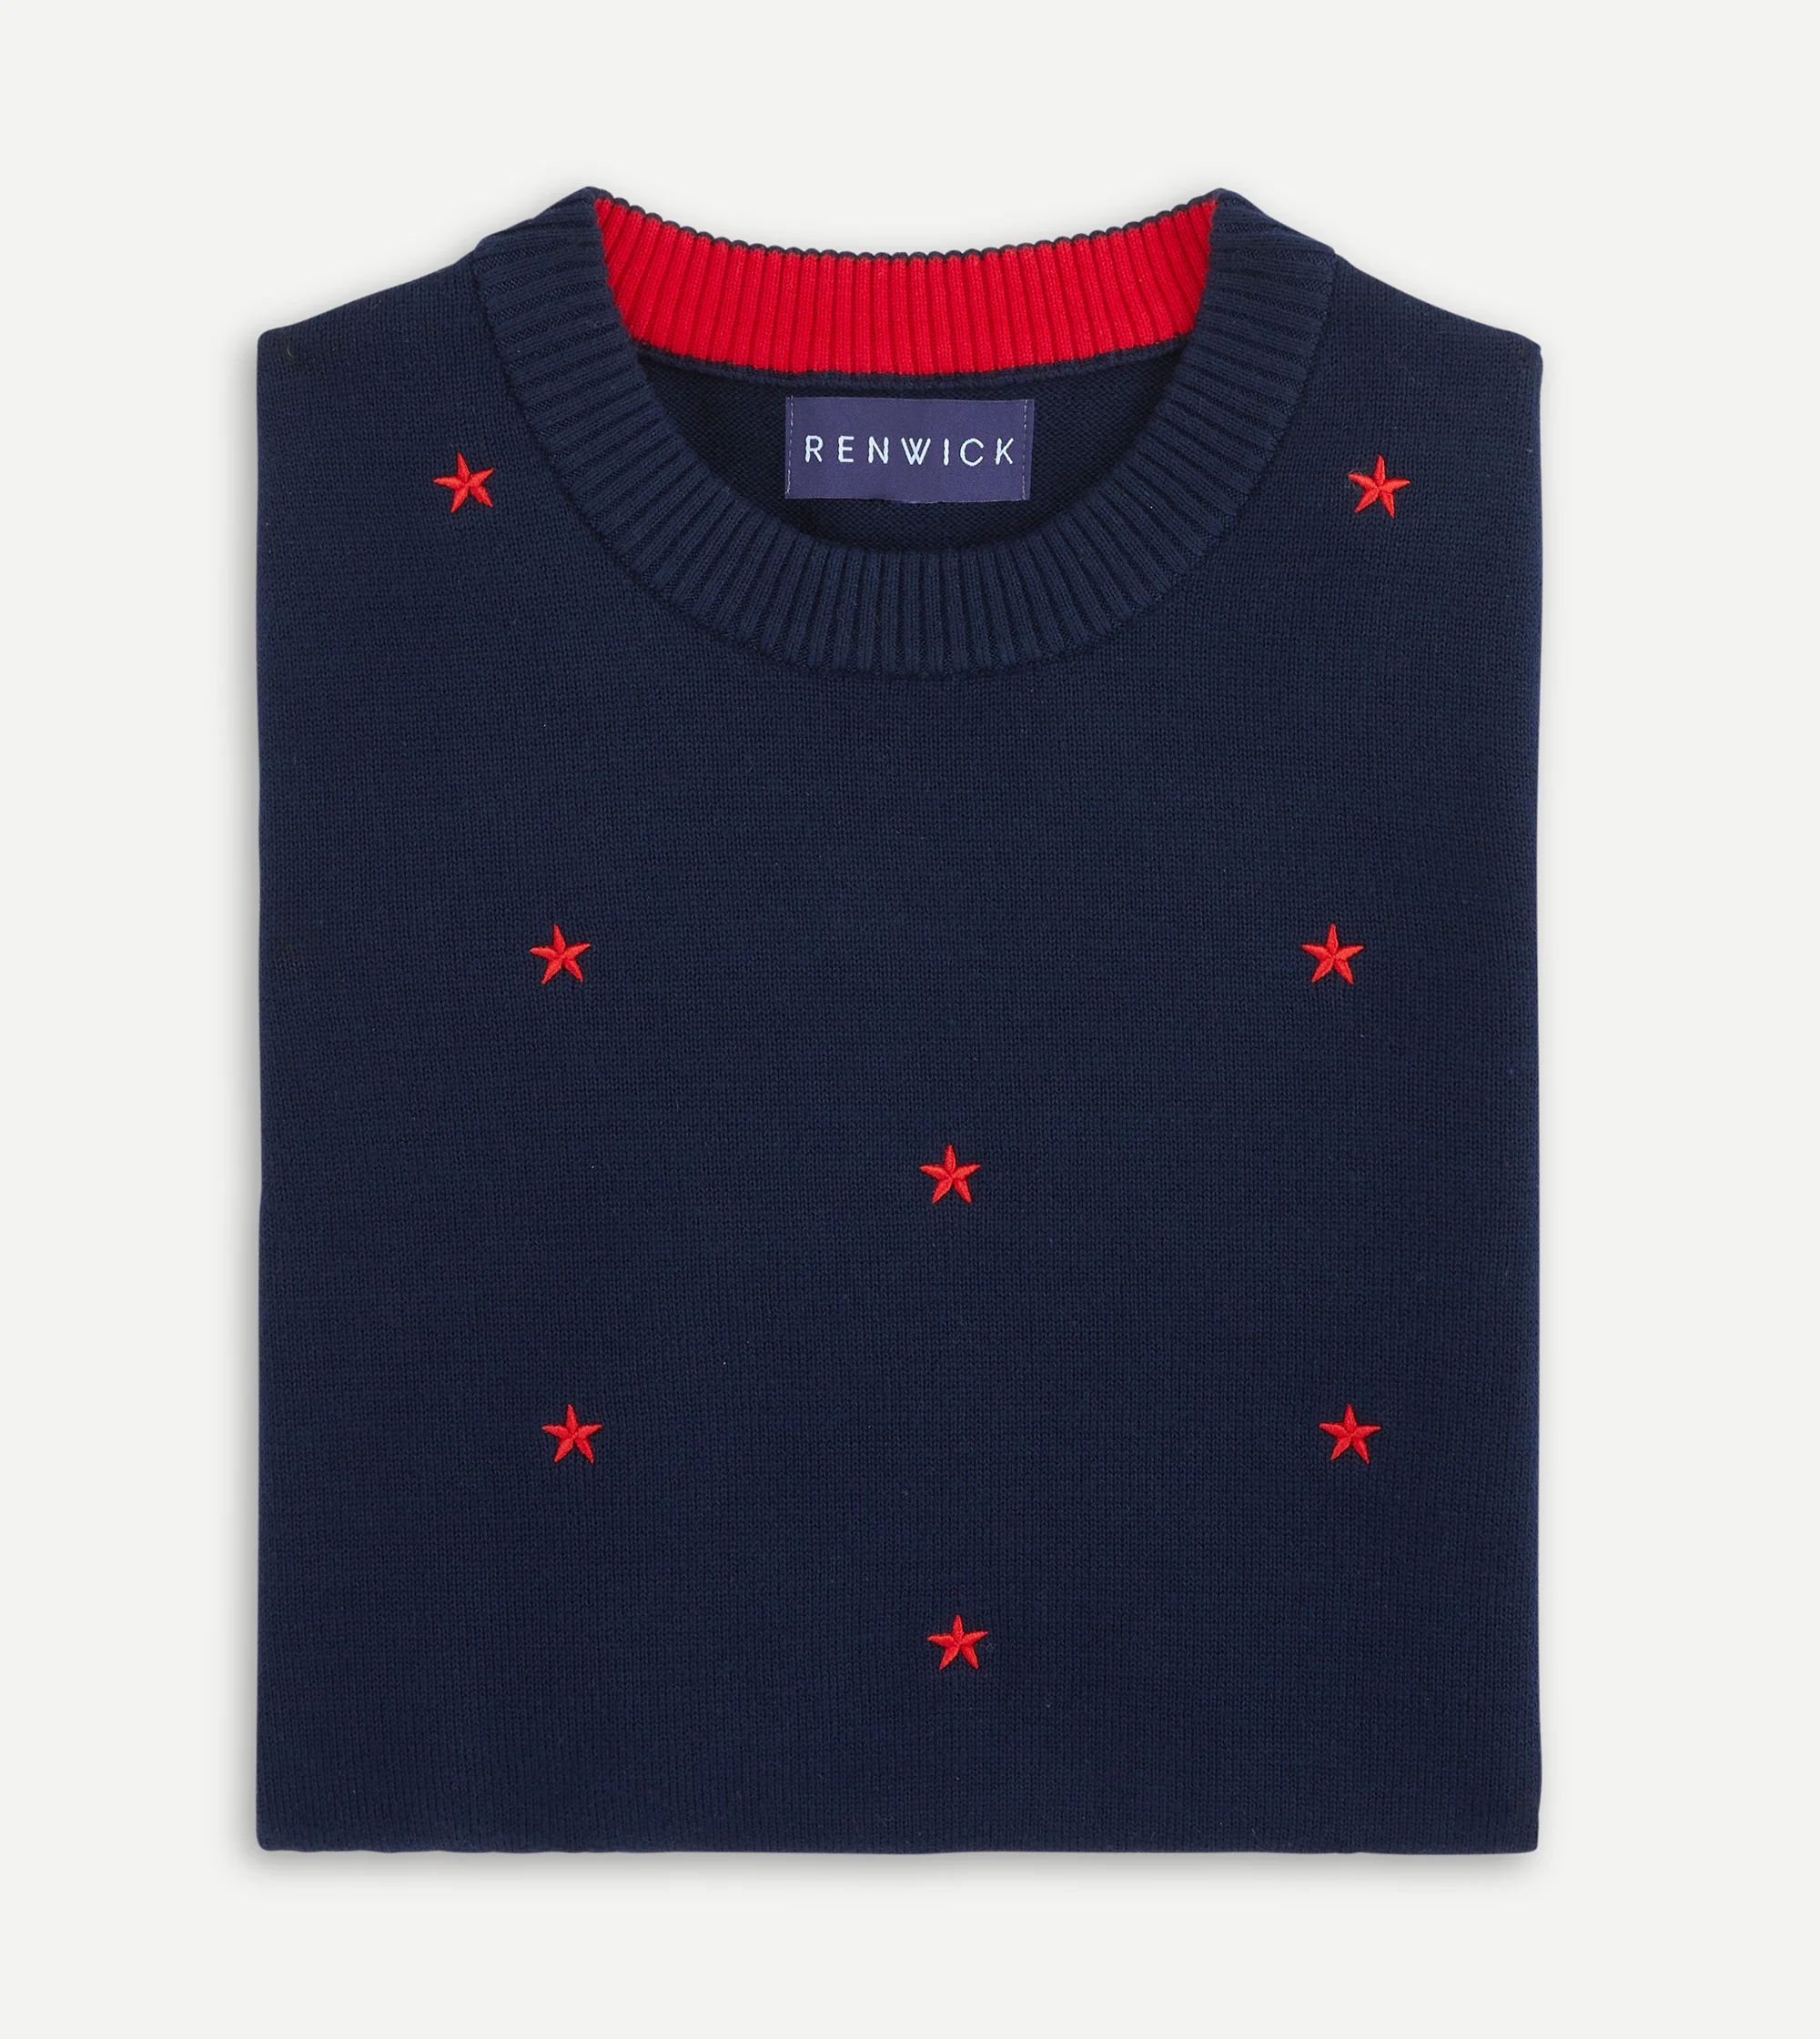 Renwick Star Embroidered Sweater | Renwick Golf